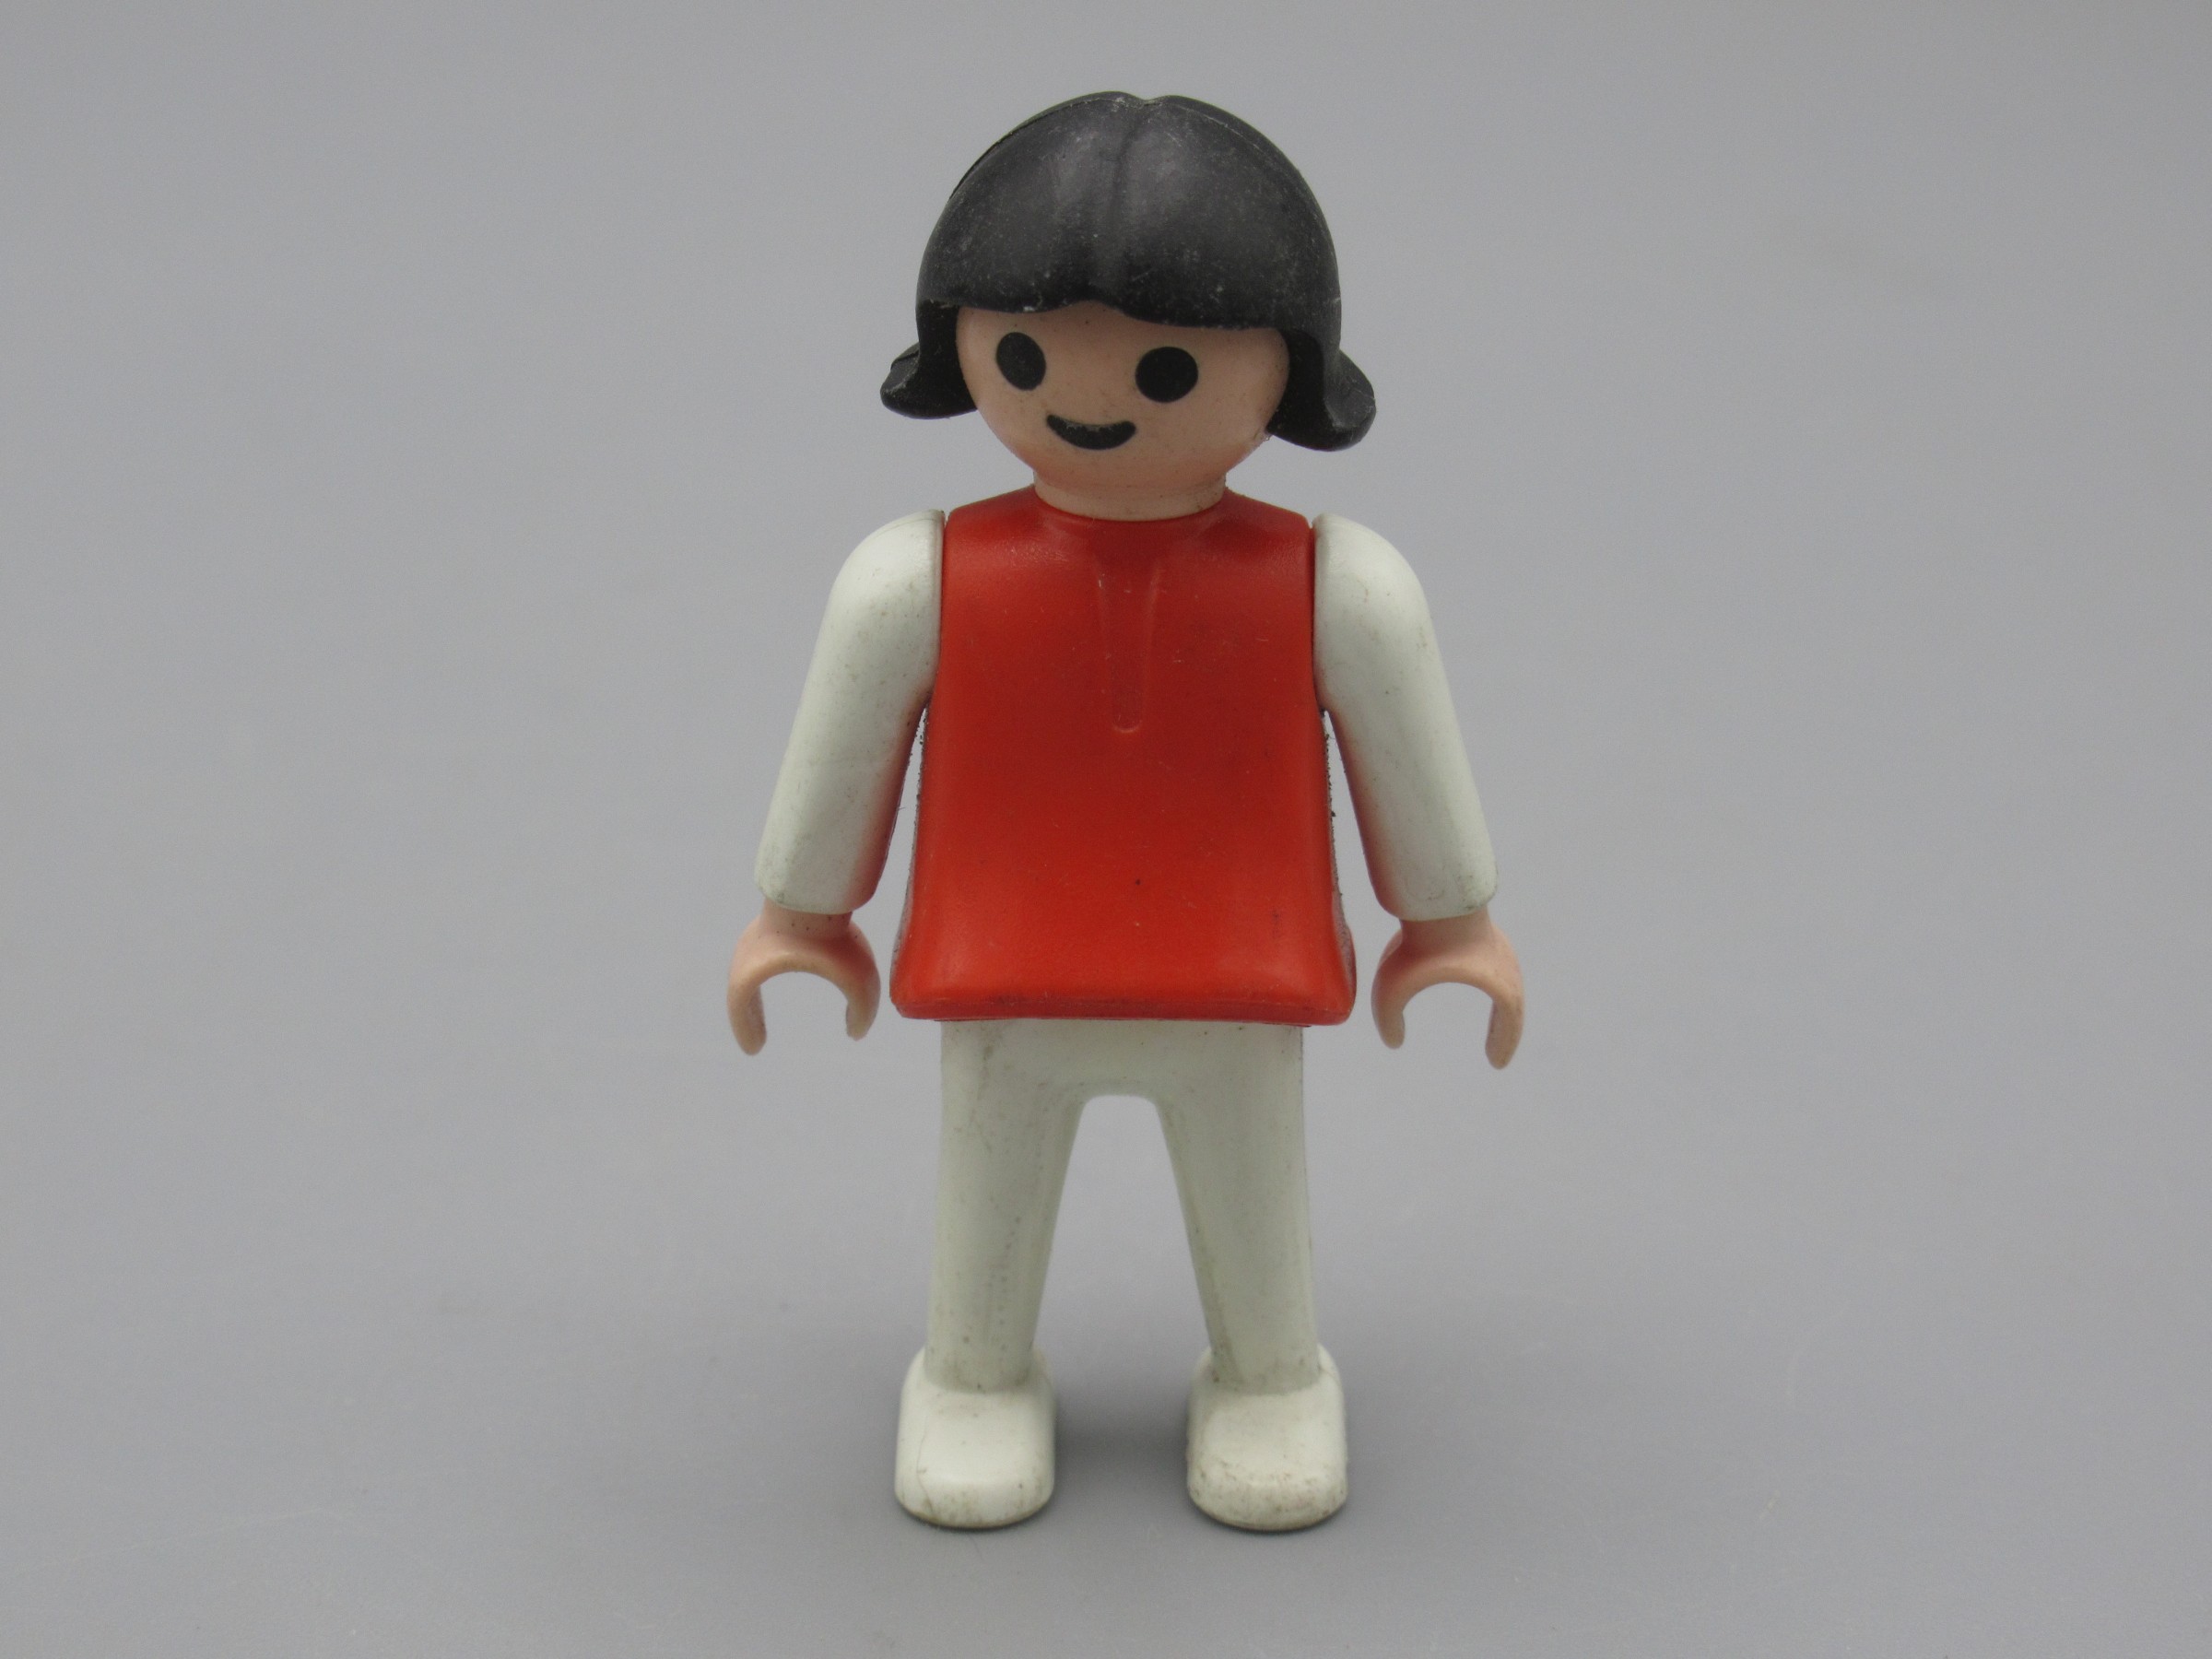 Playmobil - Fille rouge et blanche - Geobra 1981 - Passion-Miniatures